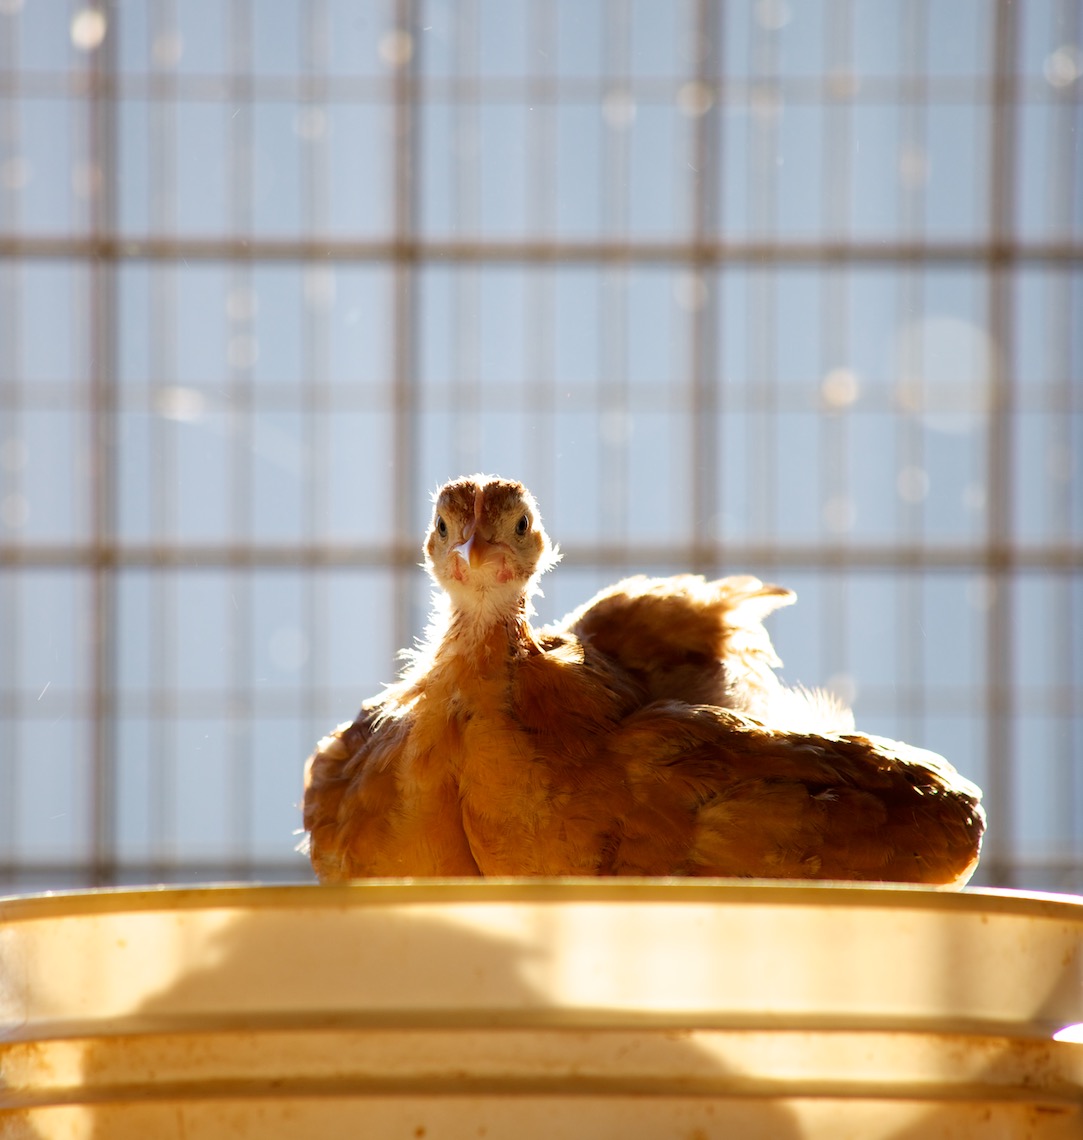 peeler-farms-chickens-texas-jason-risner-photography-1406